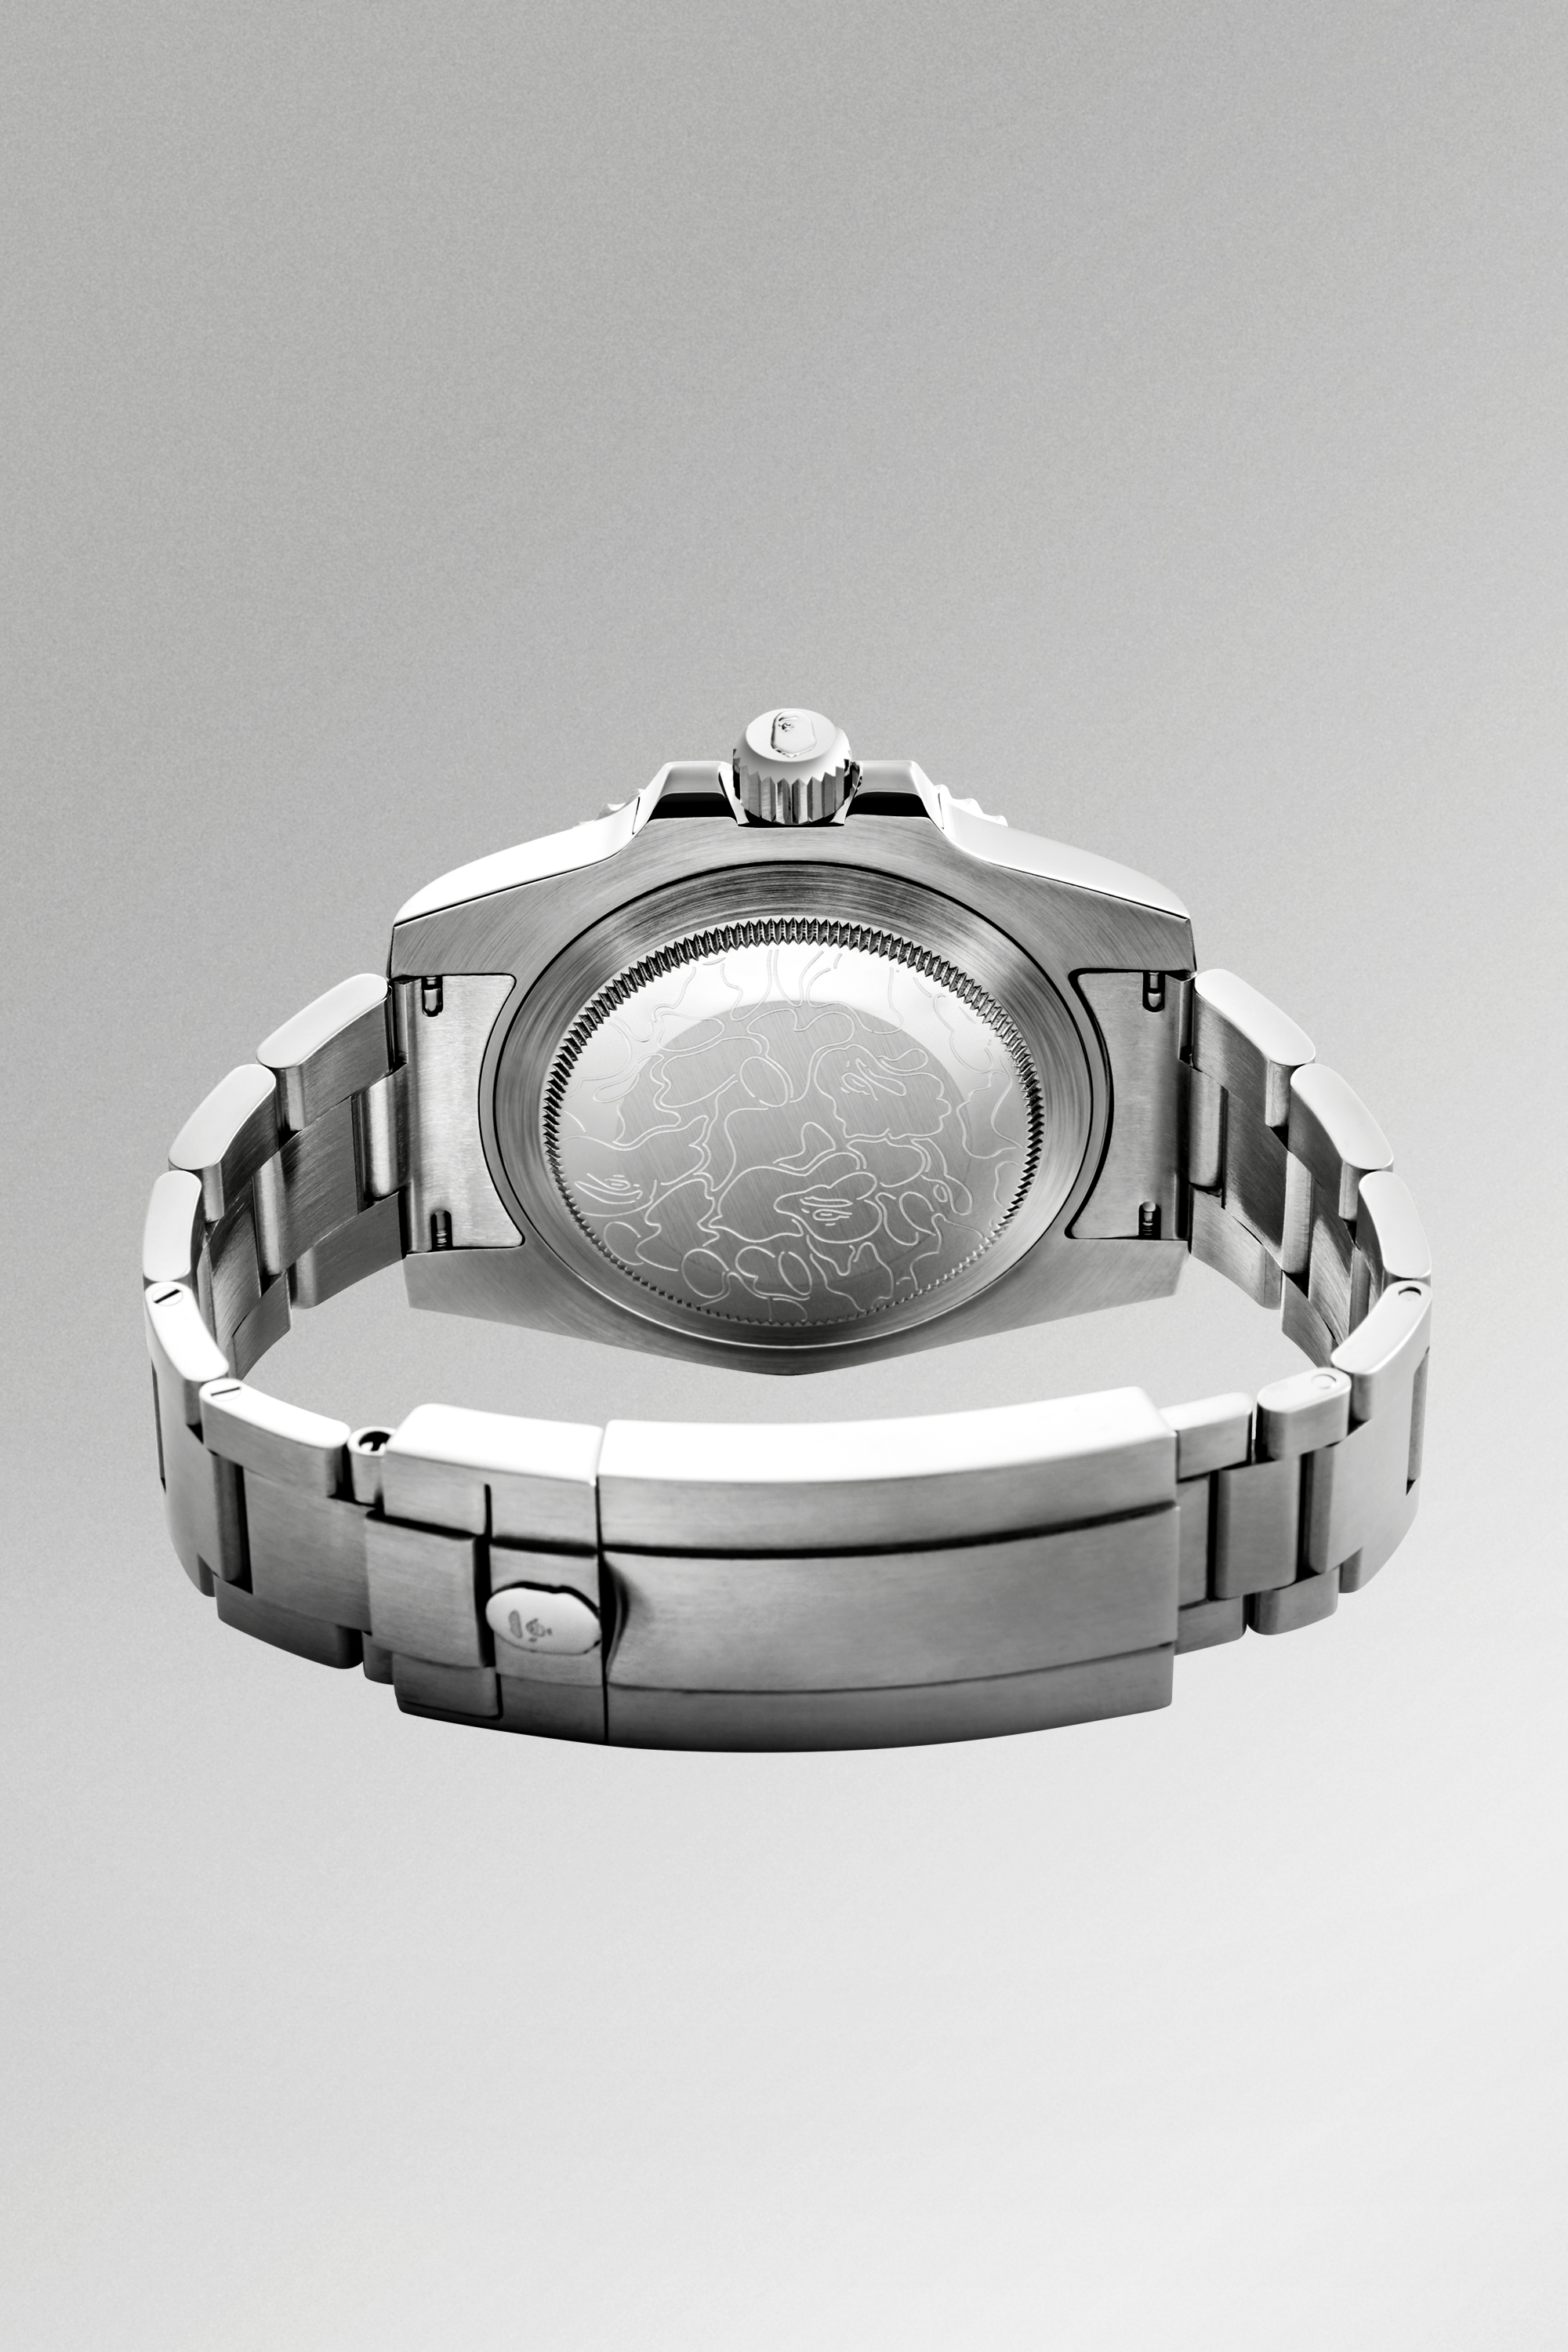 BAPE Unveils New BAPEX Type 1 Watch Collection | Complex